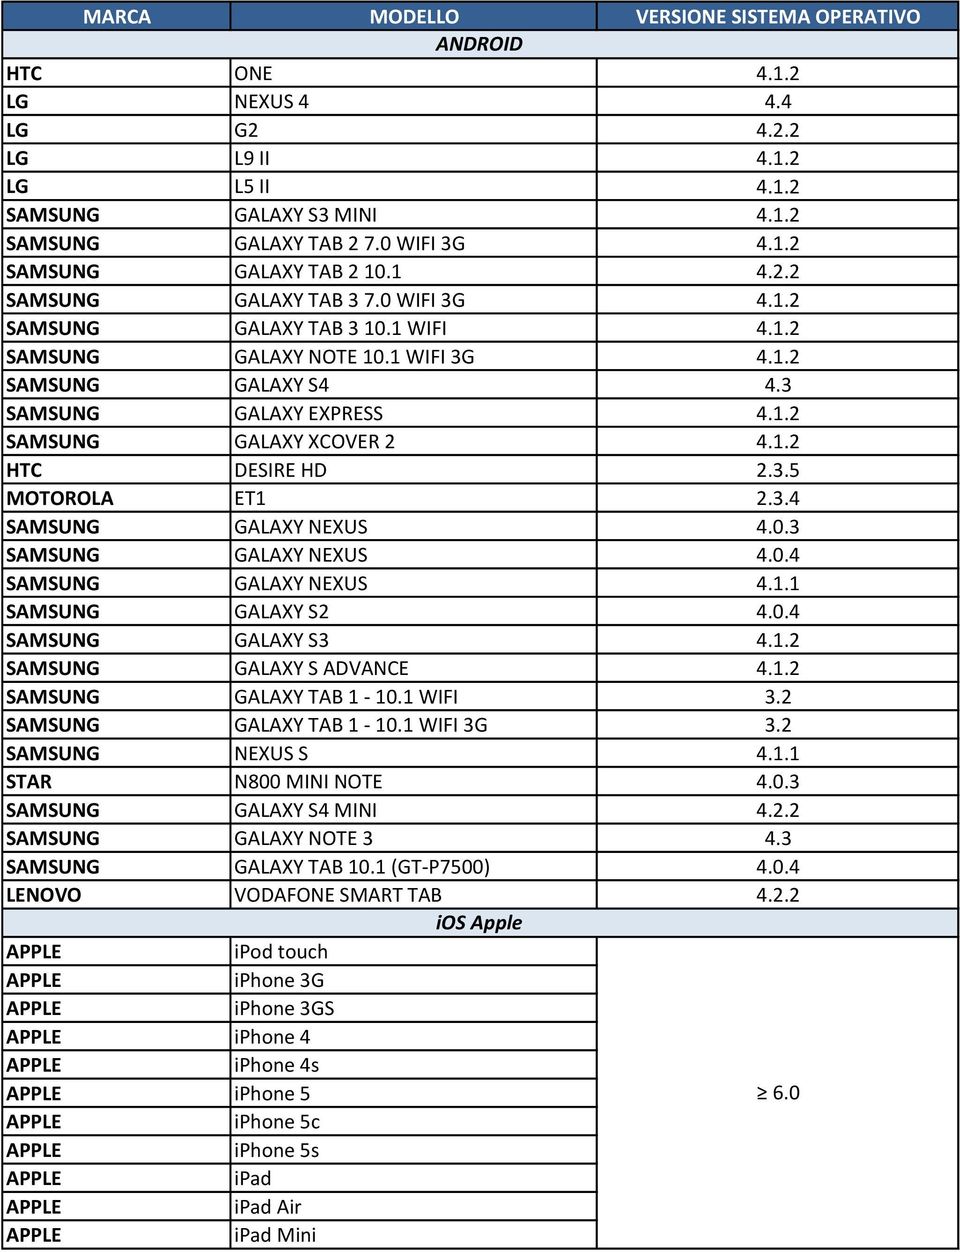 1.2 HTC DESIRE HD 2.3.5 MOTOROLA ET1 2.3.4 SAMSUNG GALAXY NEXUS 4.0.3 SAMSUNG GALAXY NEXUS 4.0.4 SAMSUNG GALAXY NEXUS 4.1.1 SAMSUNG GALAXY S2 4.0.4 SAMSUNG GALAXY S3 4.1.2 SAMSUNG GALAXY S ADVANCE 4.